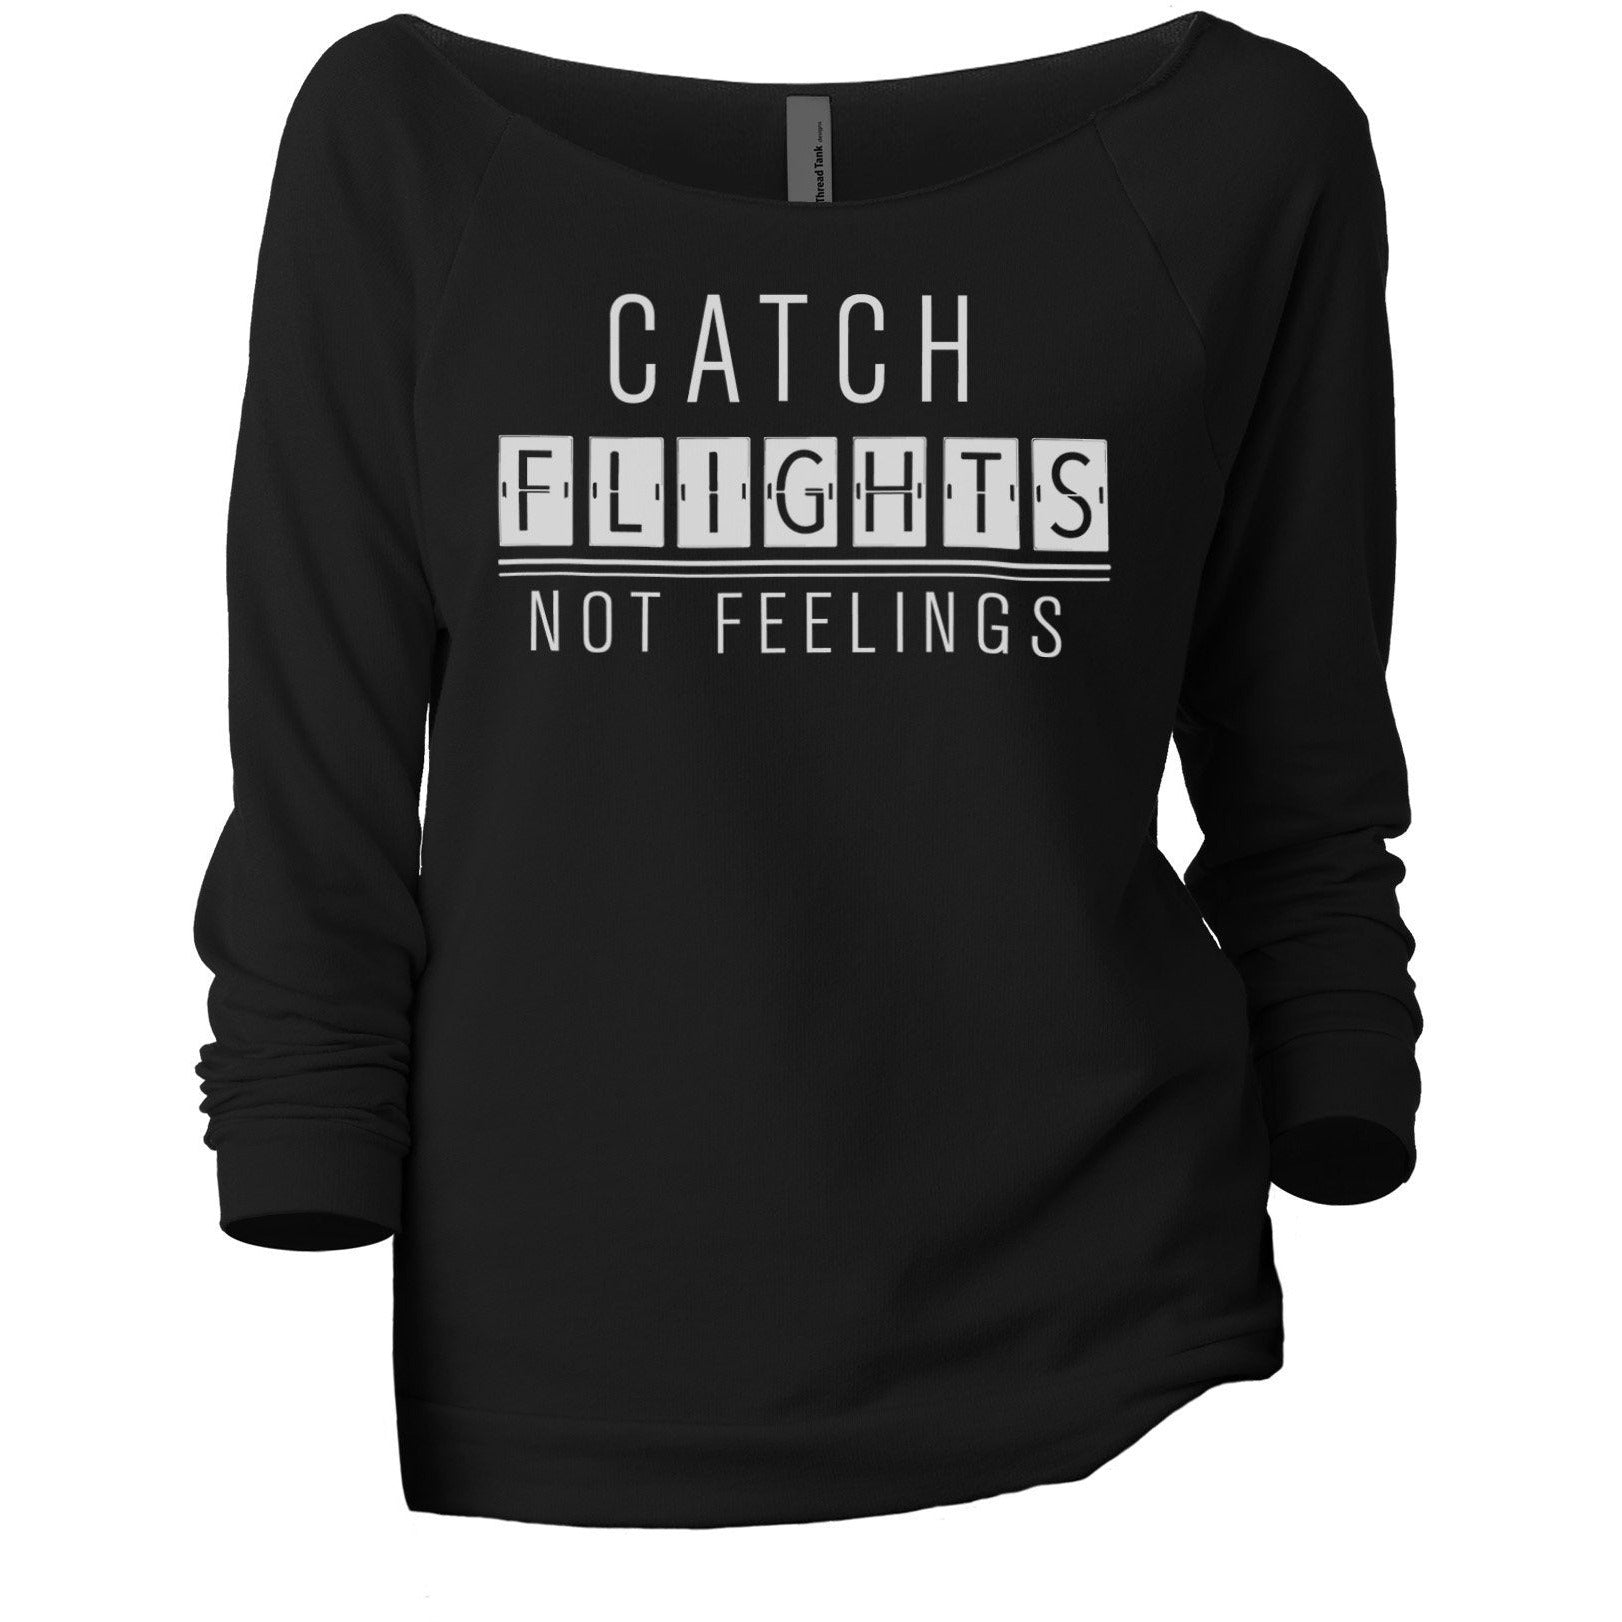 Catch Flights Not Feelings Women's Graphic Printed Lightweight Slouchy 3/4 Sleeves Sweatshirt Sport Grey